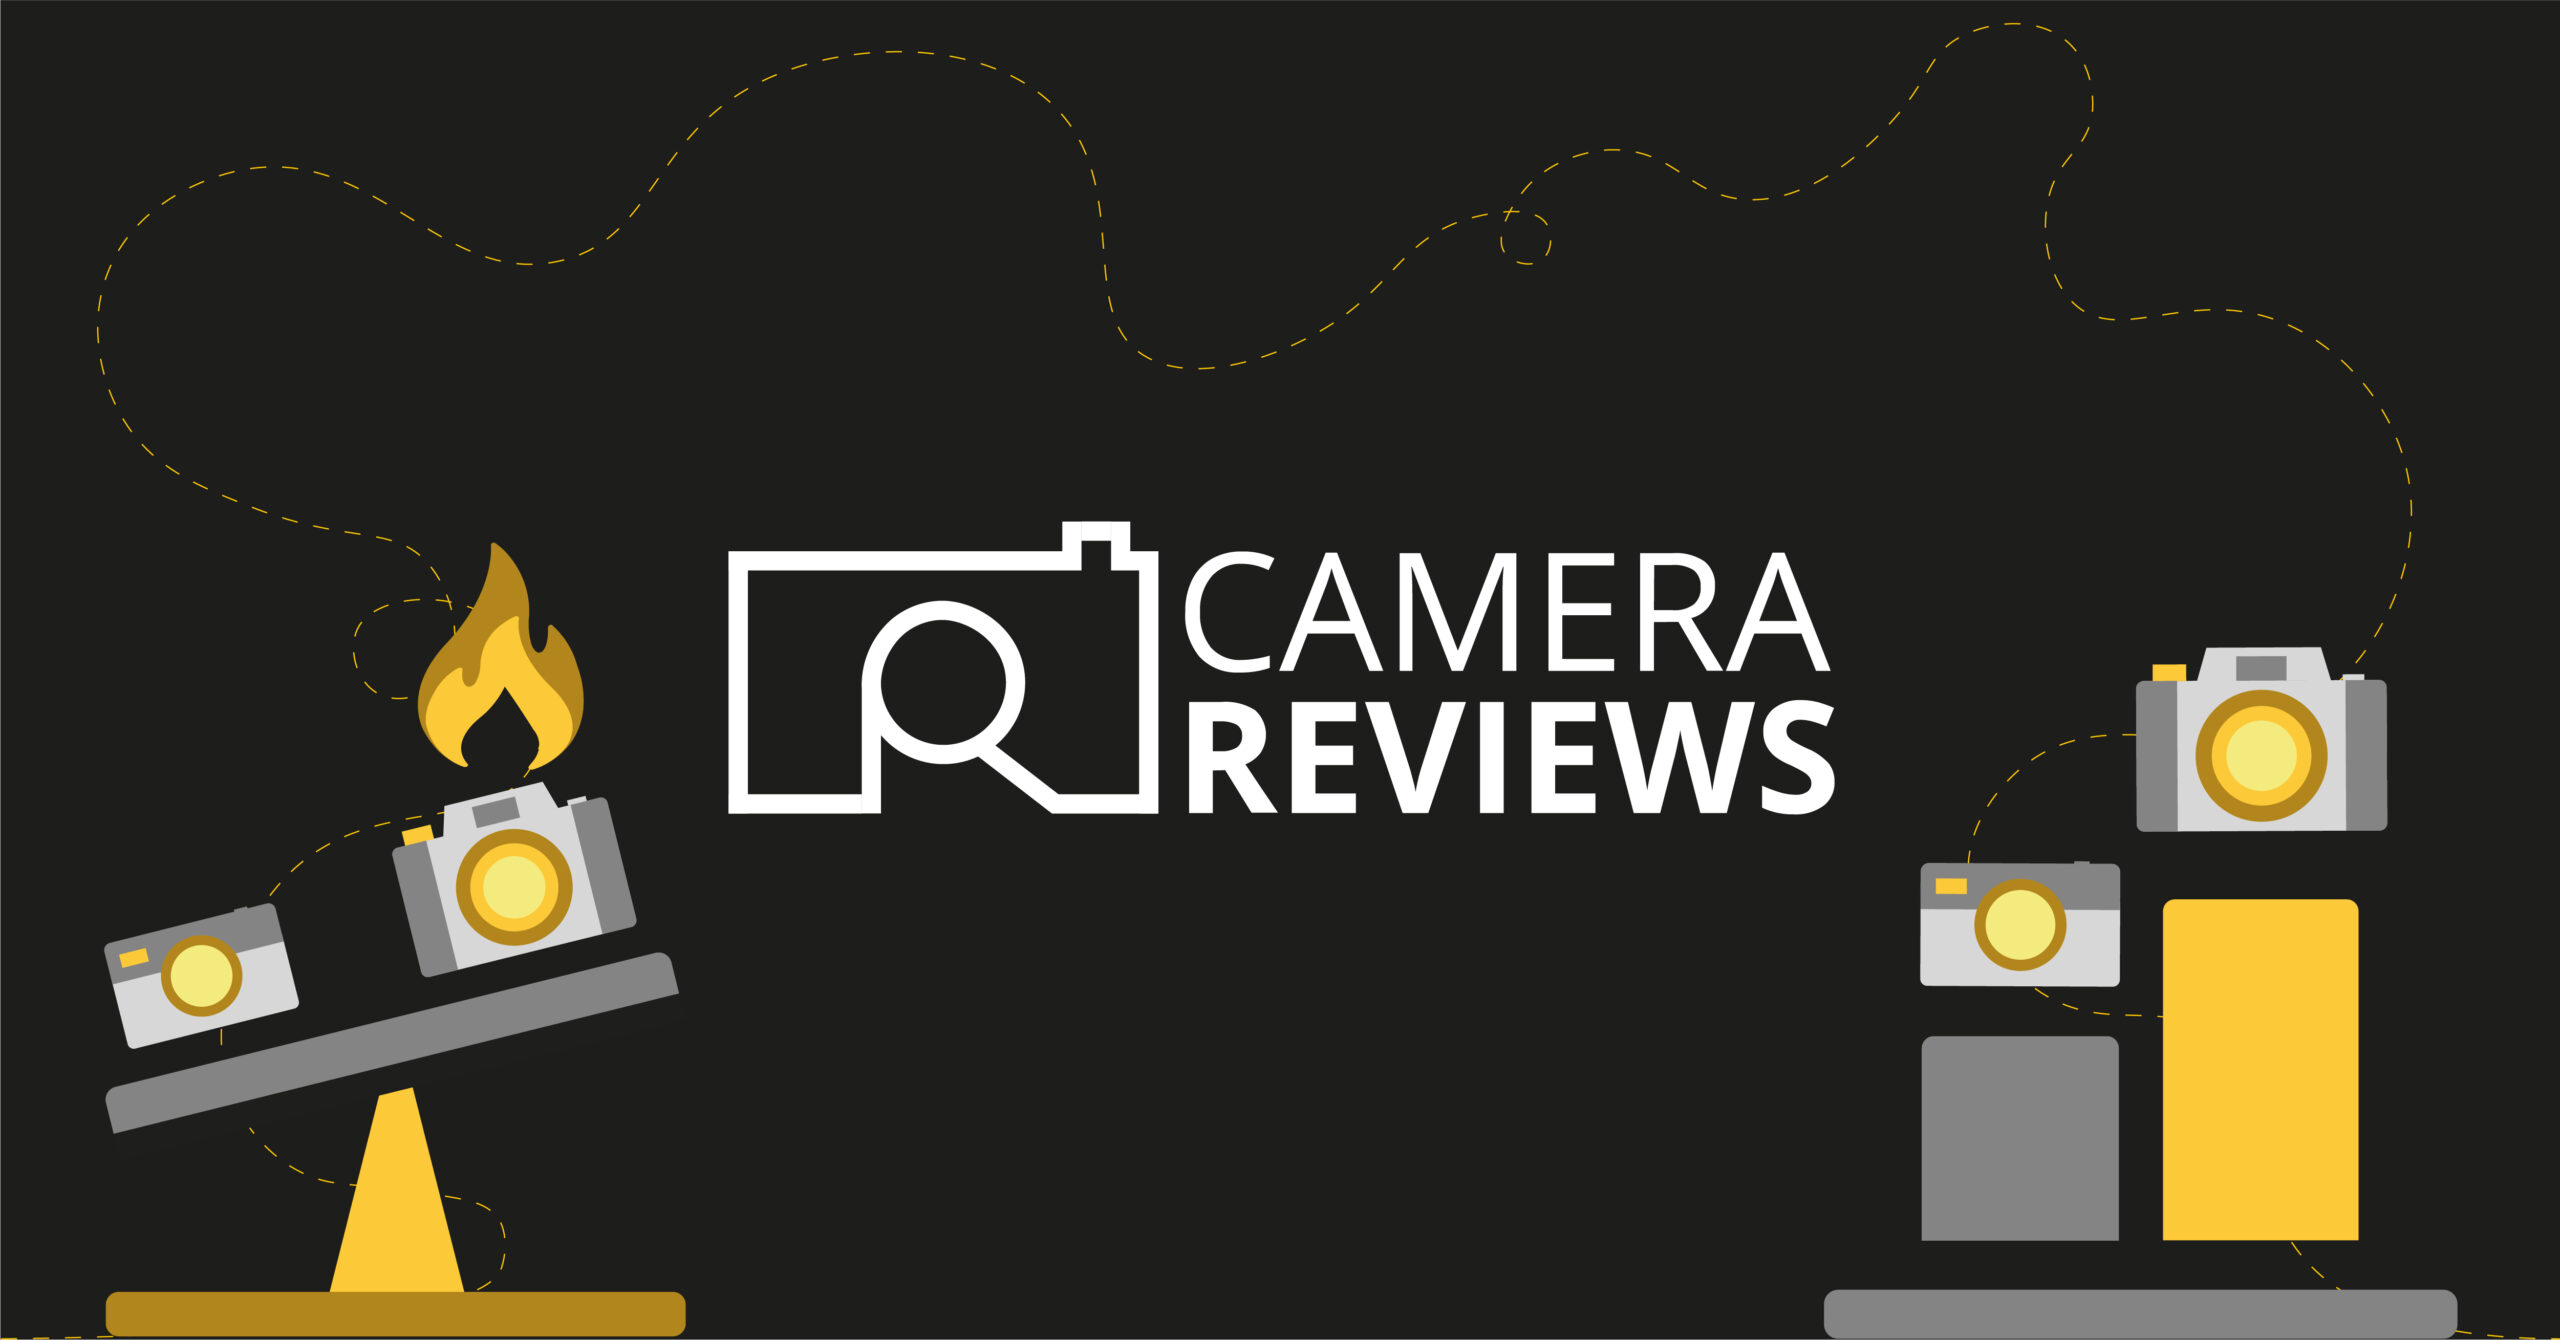 Camera Reviews Logo and Icon